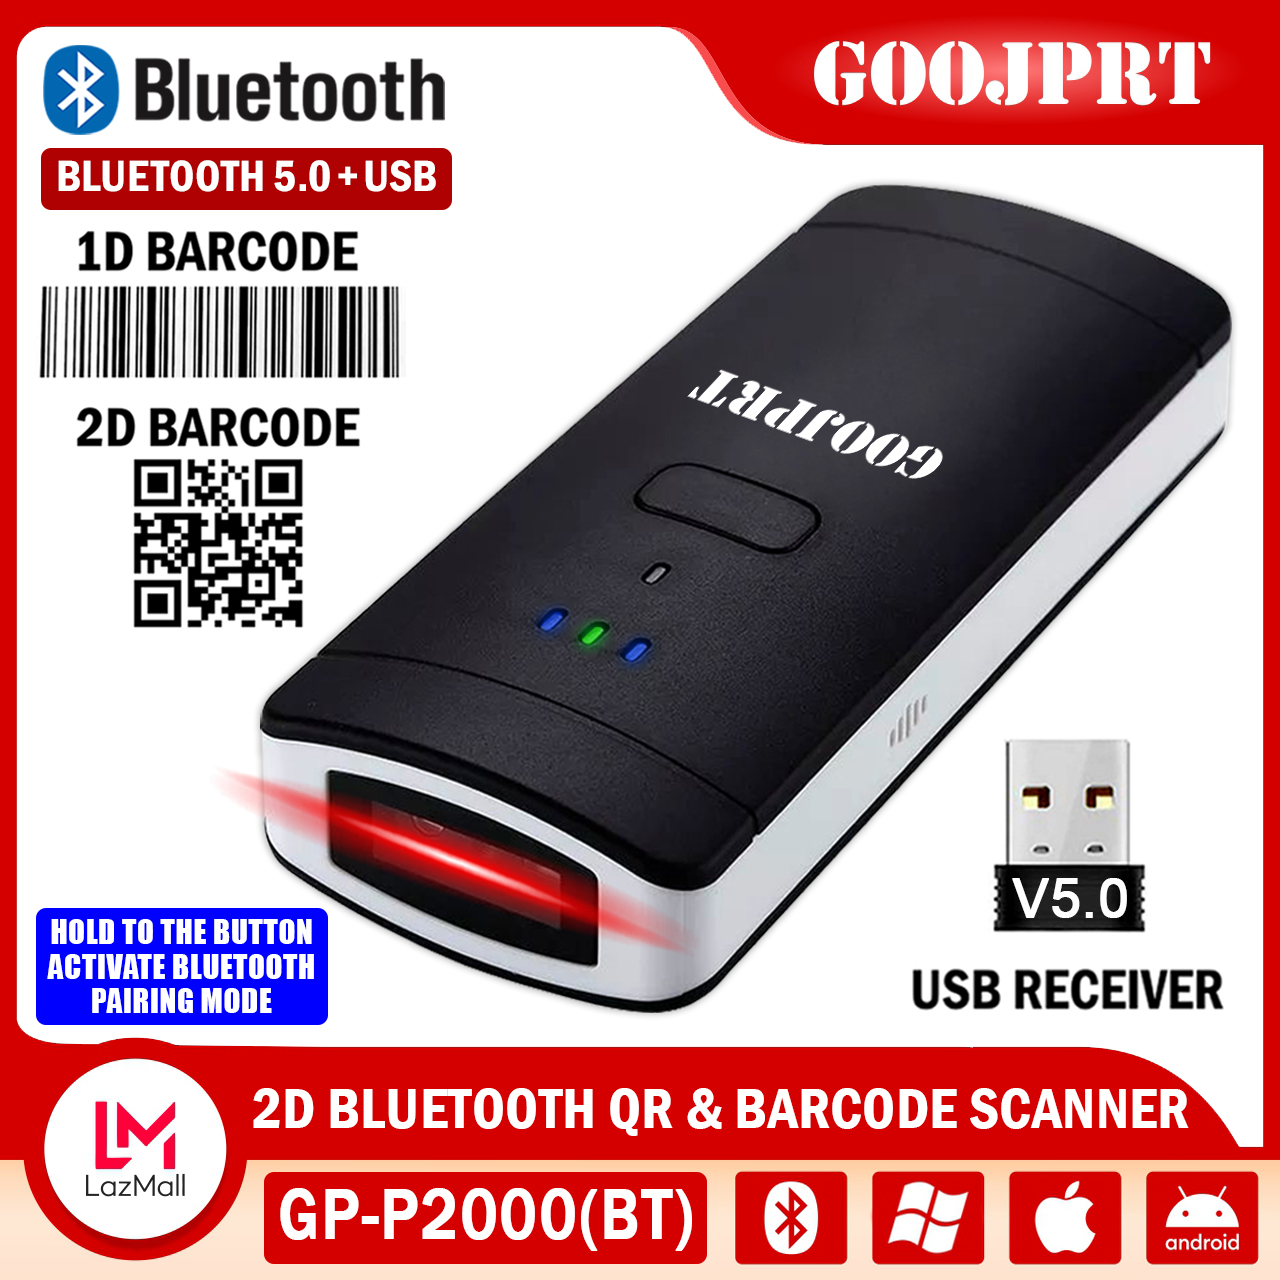 Eyoyo 1D 2D QR Wireless Barcodescanner 3-in-1 BT 2.4 G USB Wired Portable Handheld Barcode Reader für PDF417 Data Matrix UPC kompatible Laptops/PC/Android/iPhone iOS 